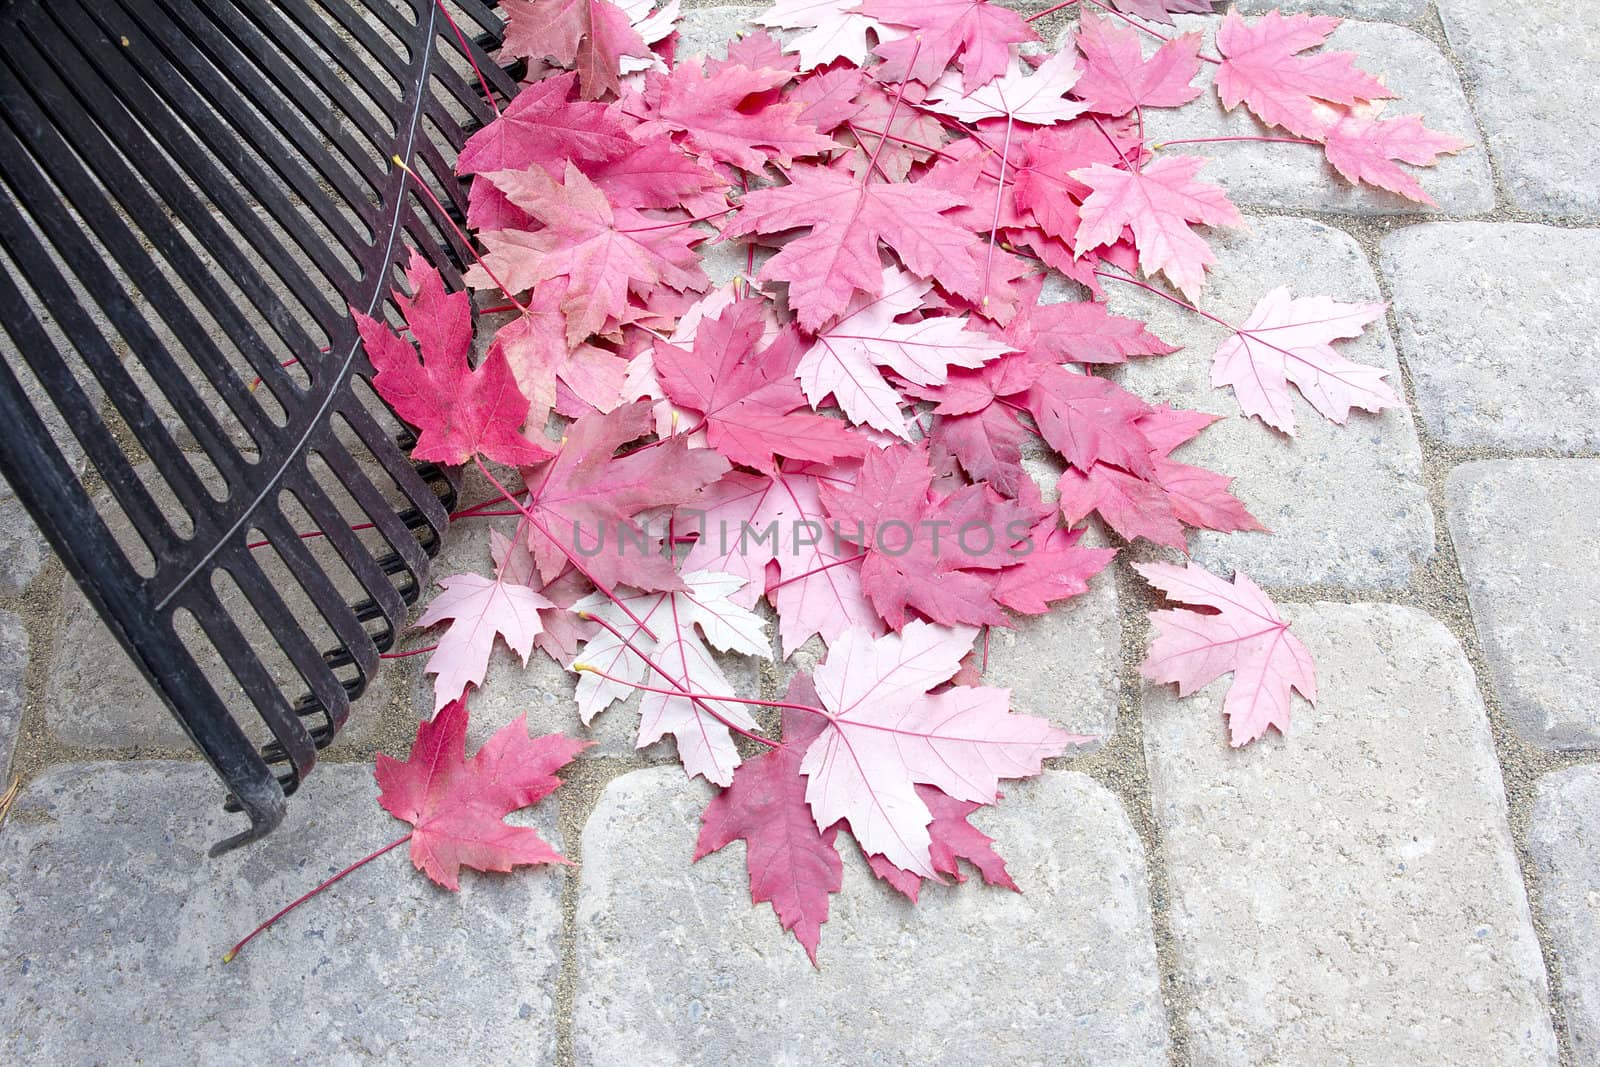 Raking Fallen Red Maple Leaves by jpldesigns